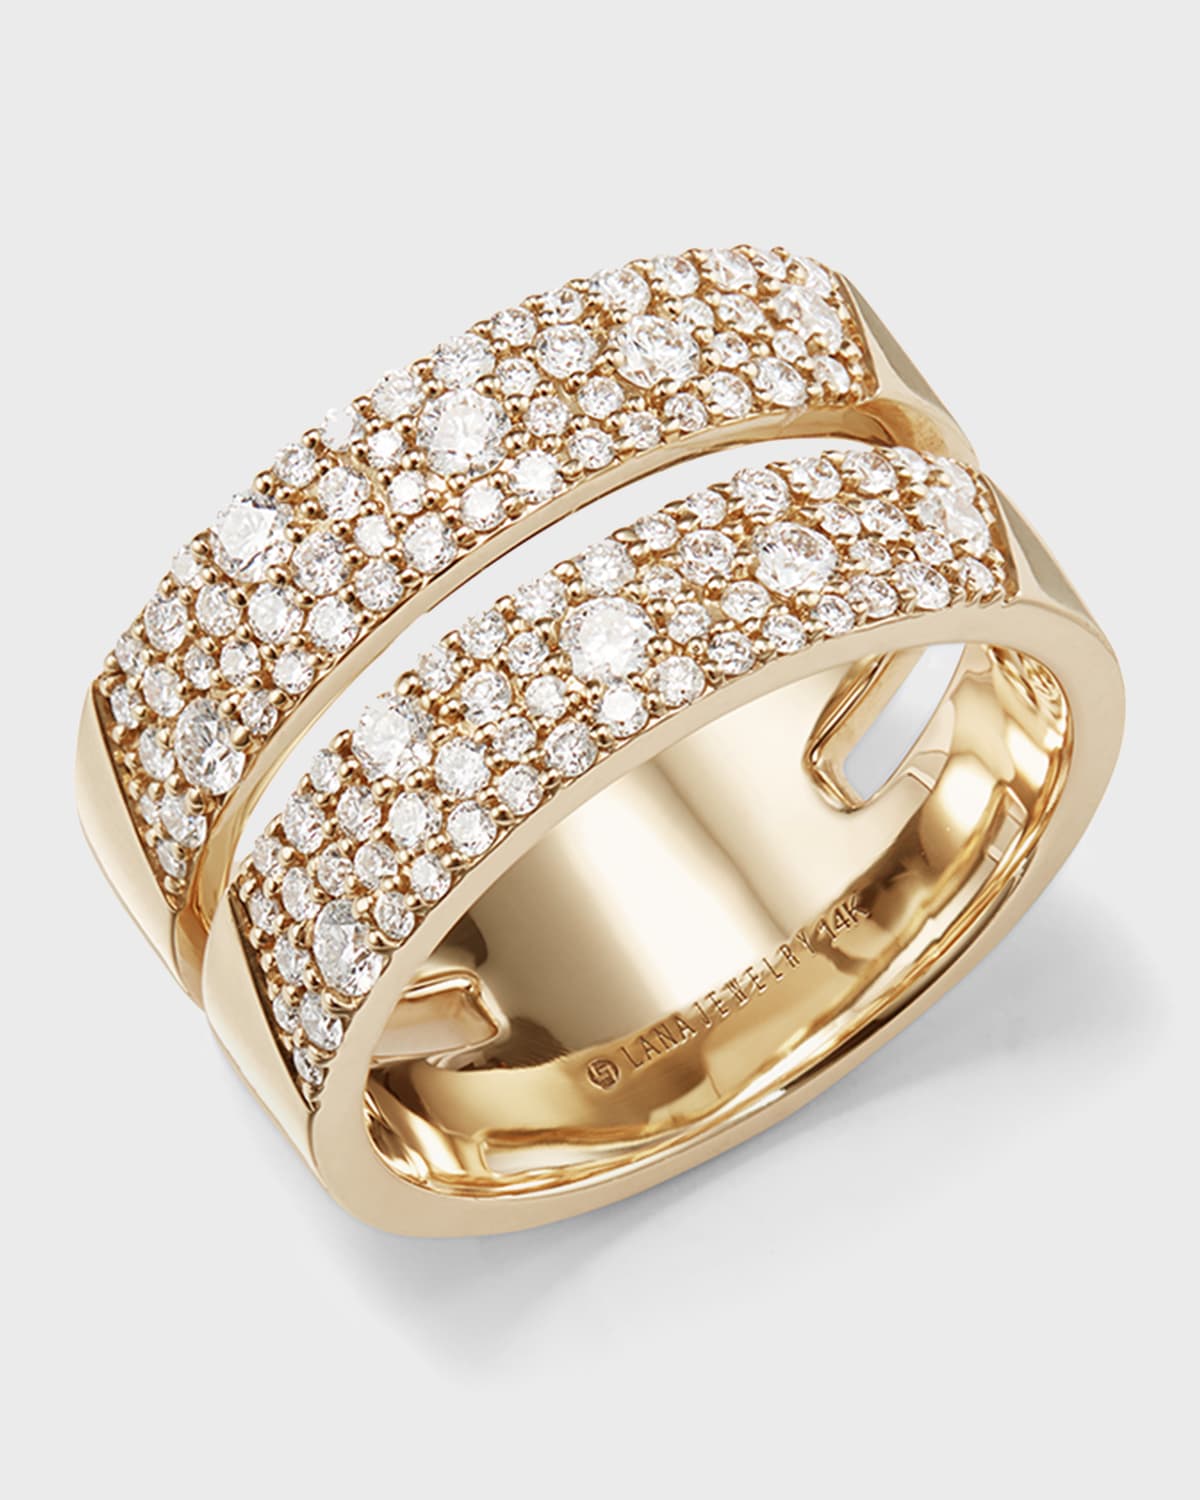 LANA JEWELRY 14k Flawless Diamond Double Vanity Ring, Size 7